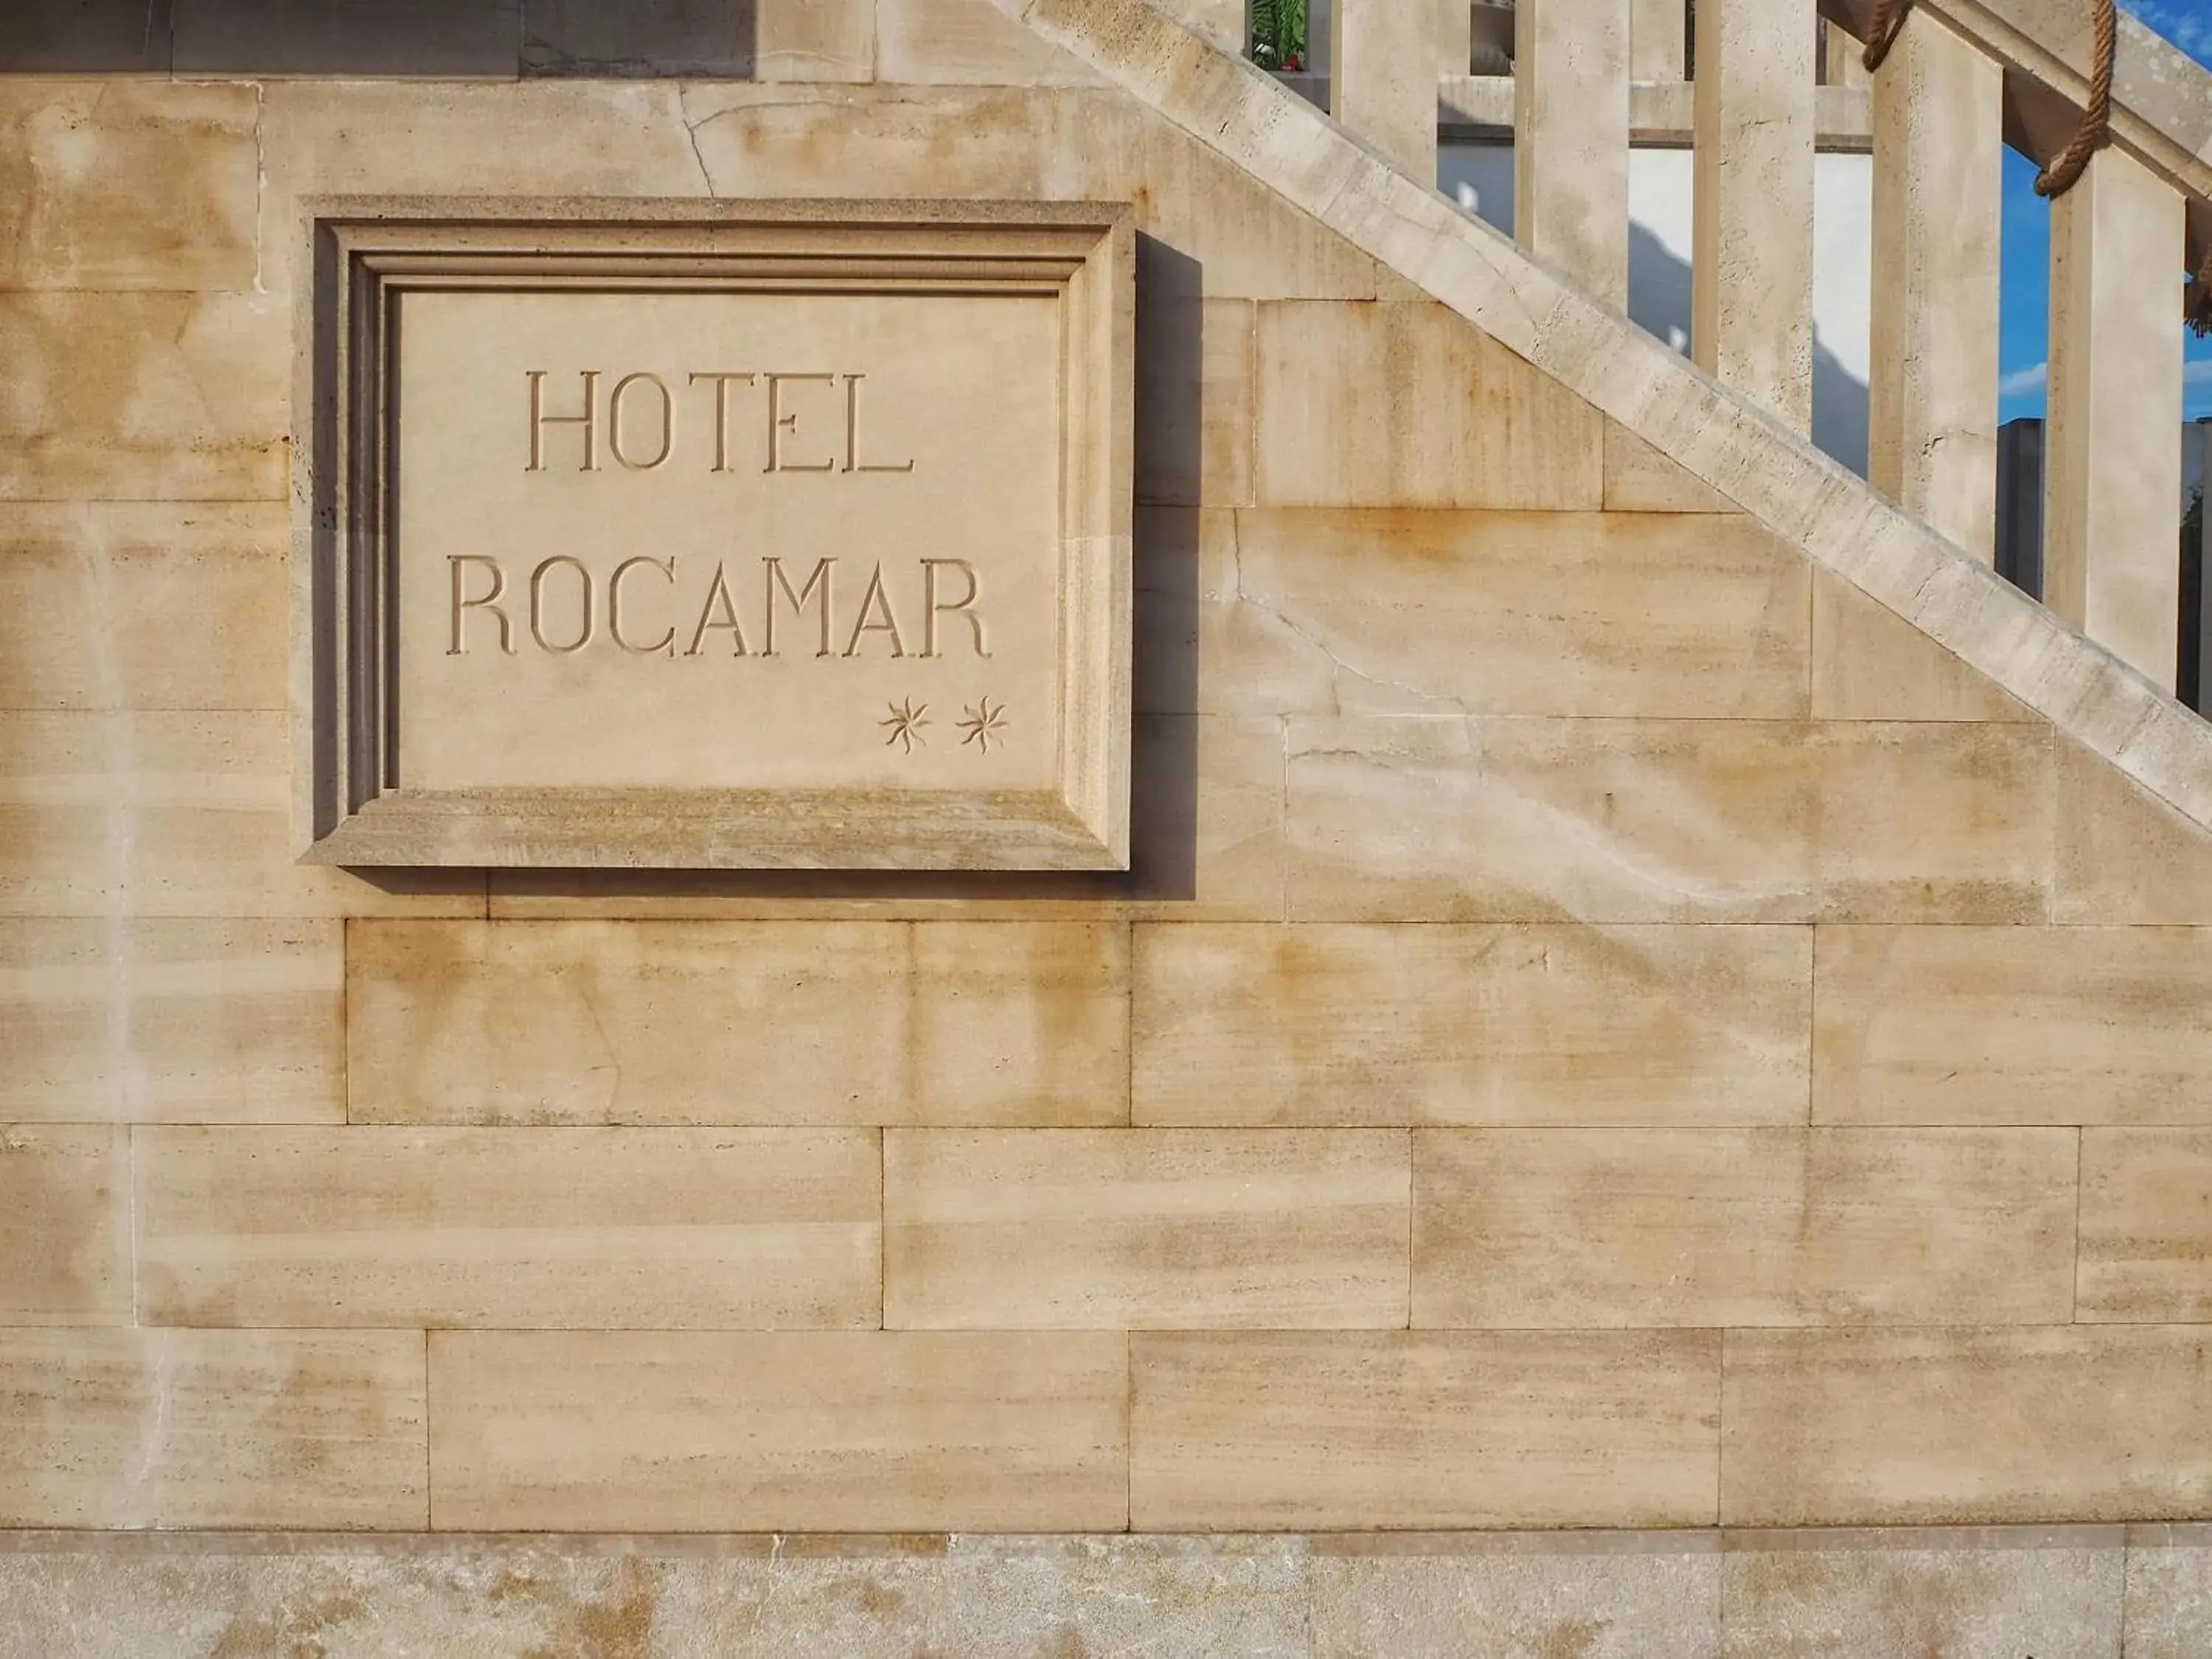 Property logo or sign in Hotel Rocamar